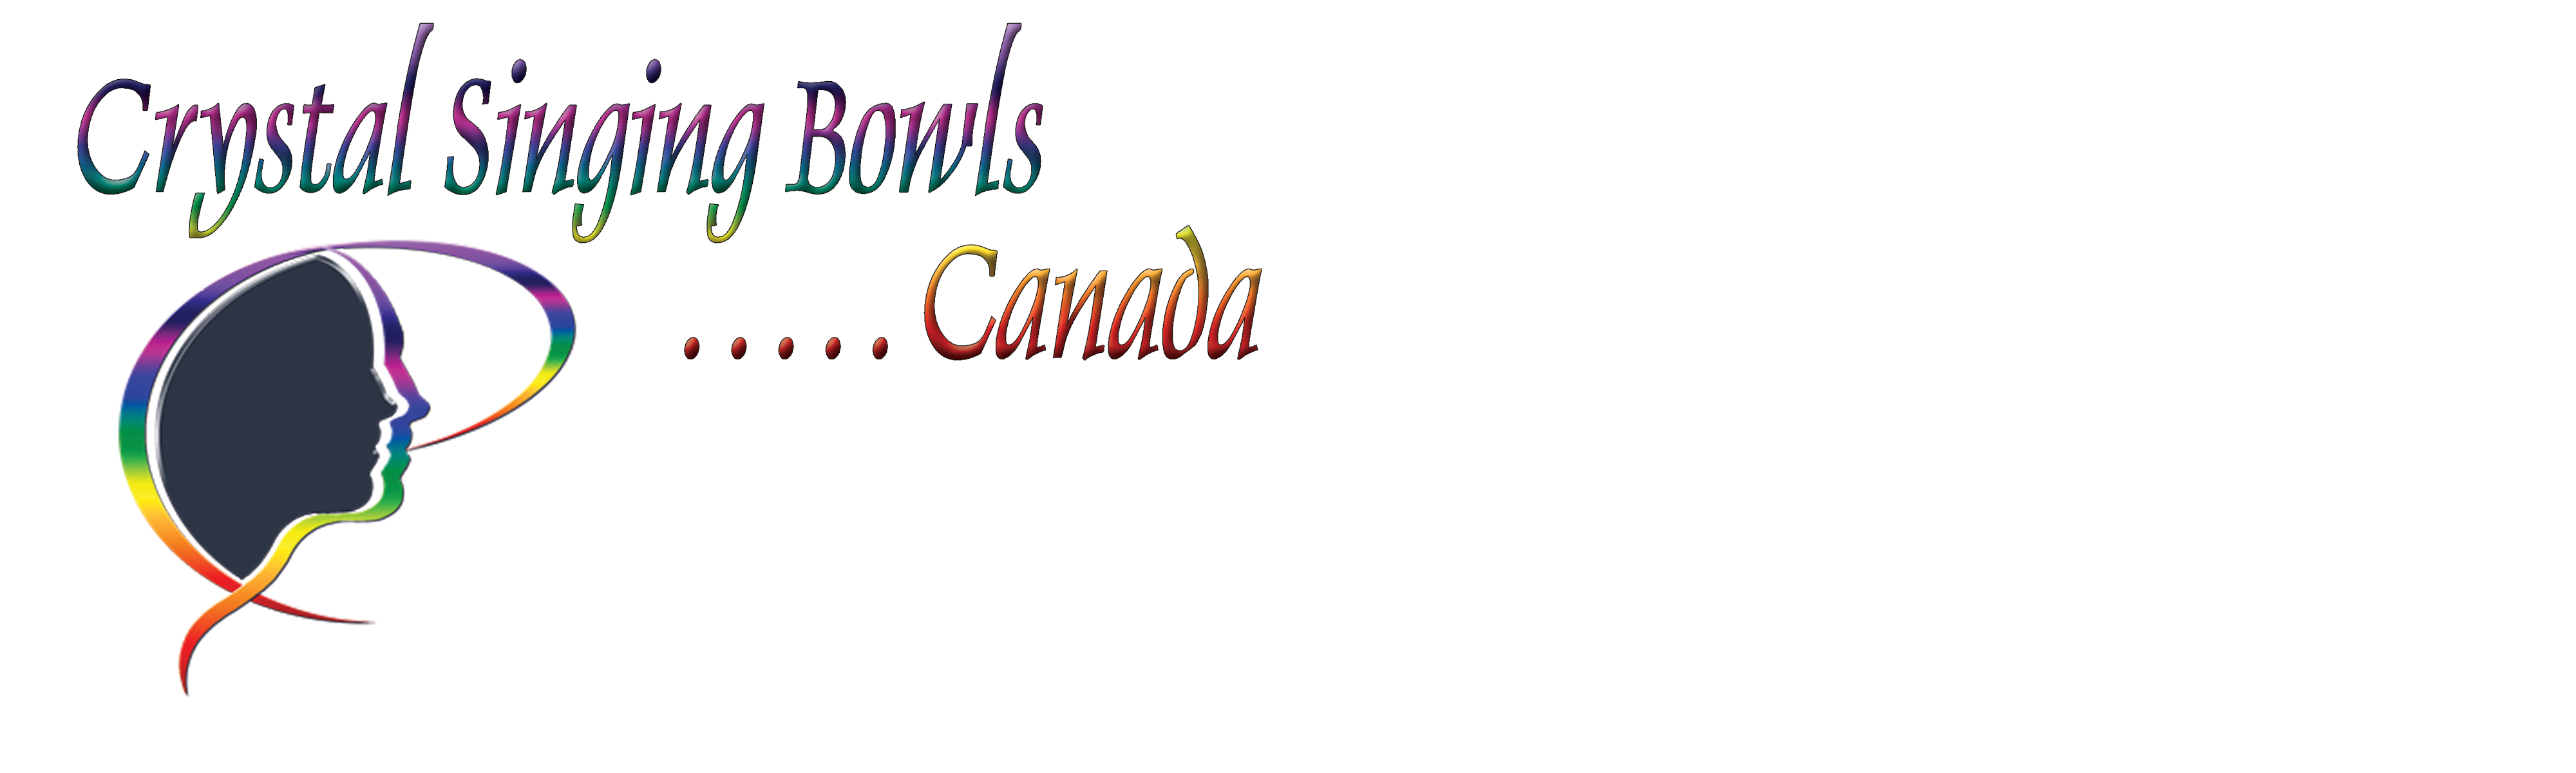 Crystal Singing Bowls Canada